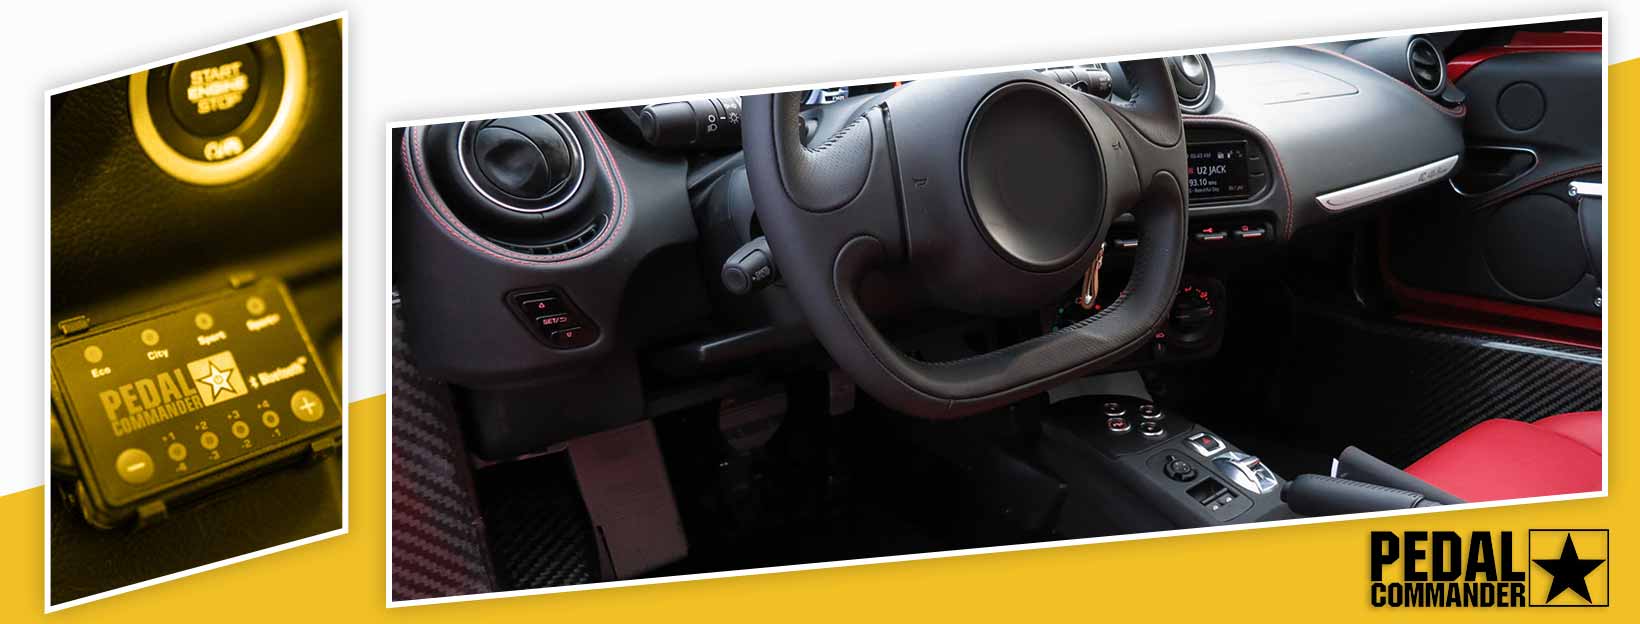 Pedal Commander for Alfa Romeo 4C - interior